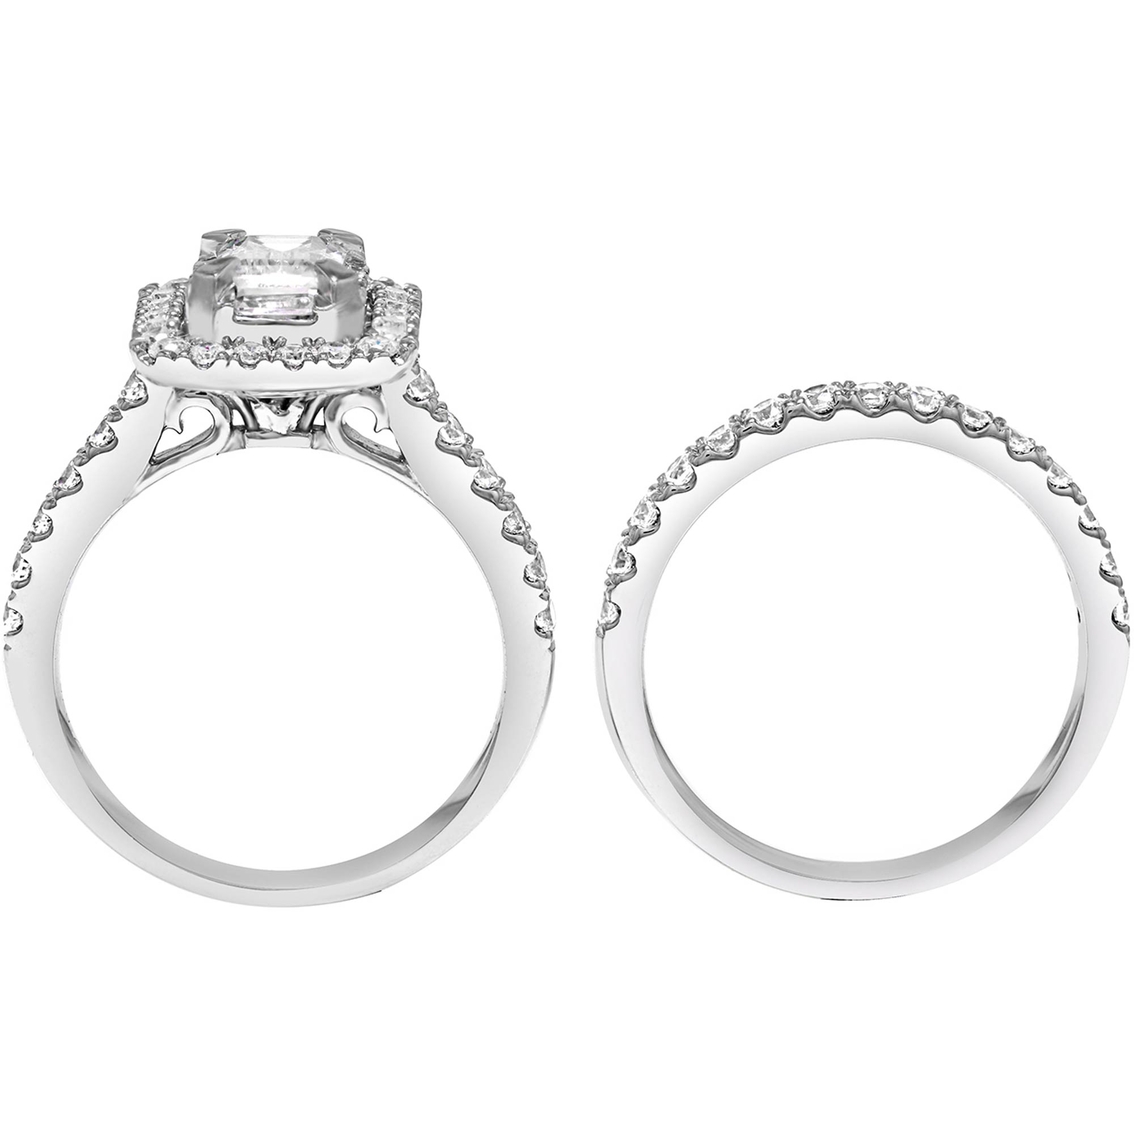 14K White Gold 2 CTW Emerald Cut Bridal Set Size 7 - Image 3 of 3